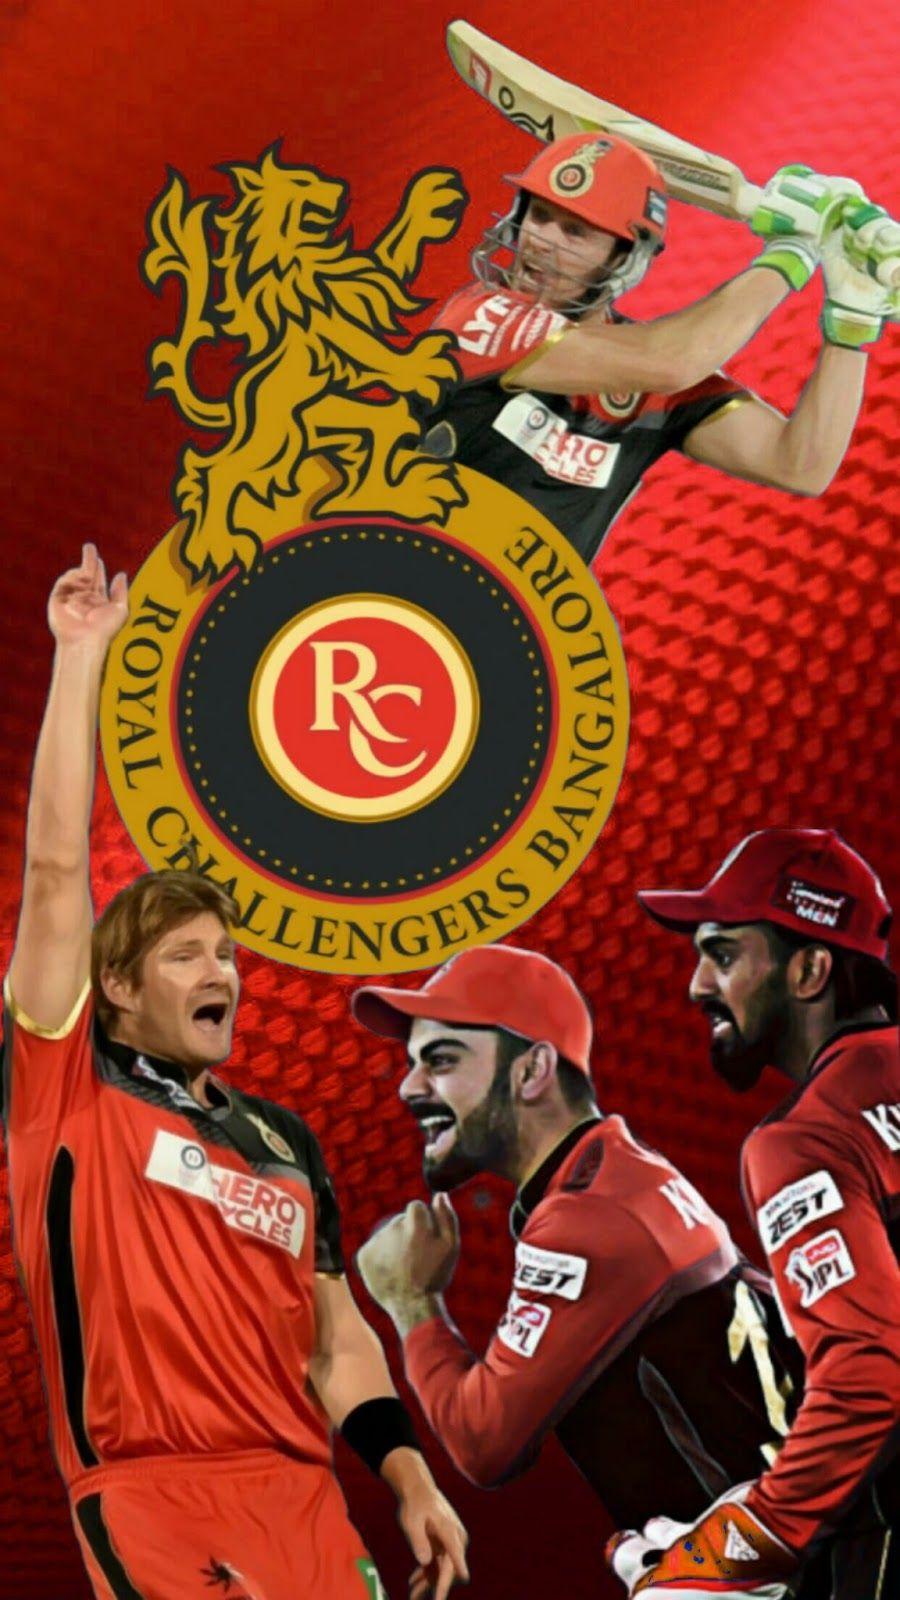 Download Royal Challengers Bangalore Cricket Team Wallpaper | Wallpapers.com